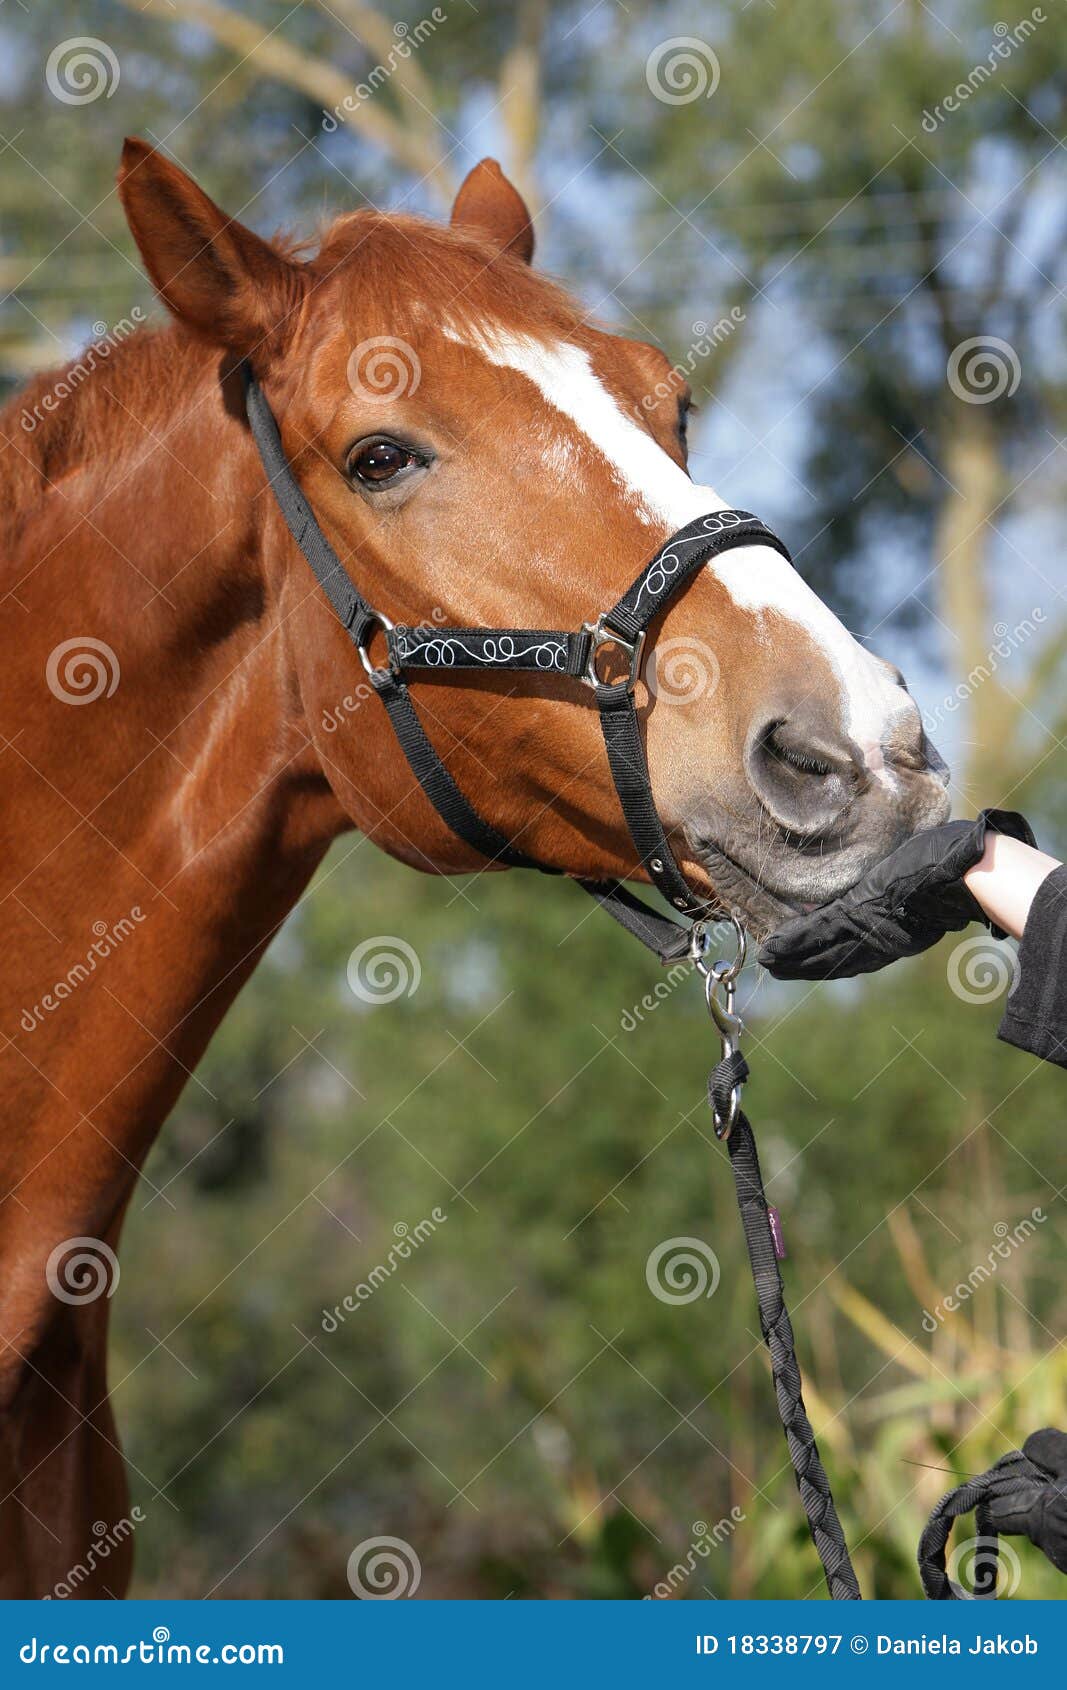 hessian warmblood horse